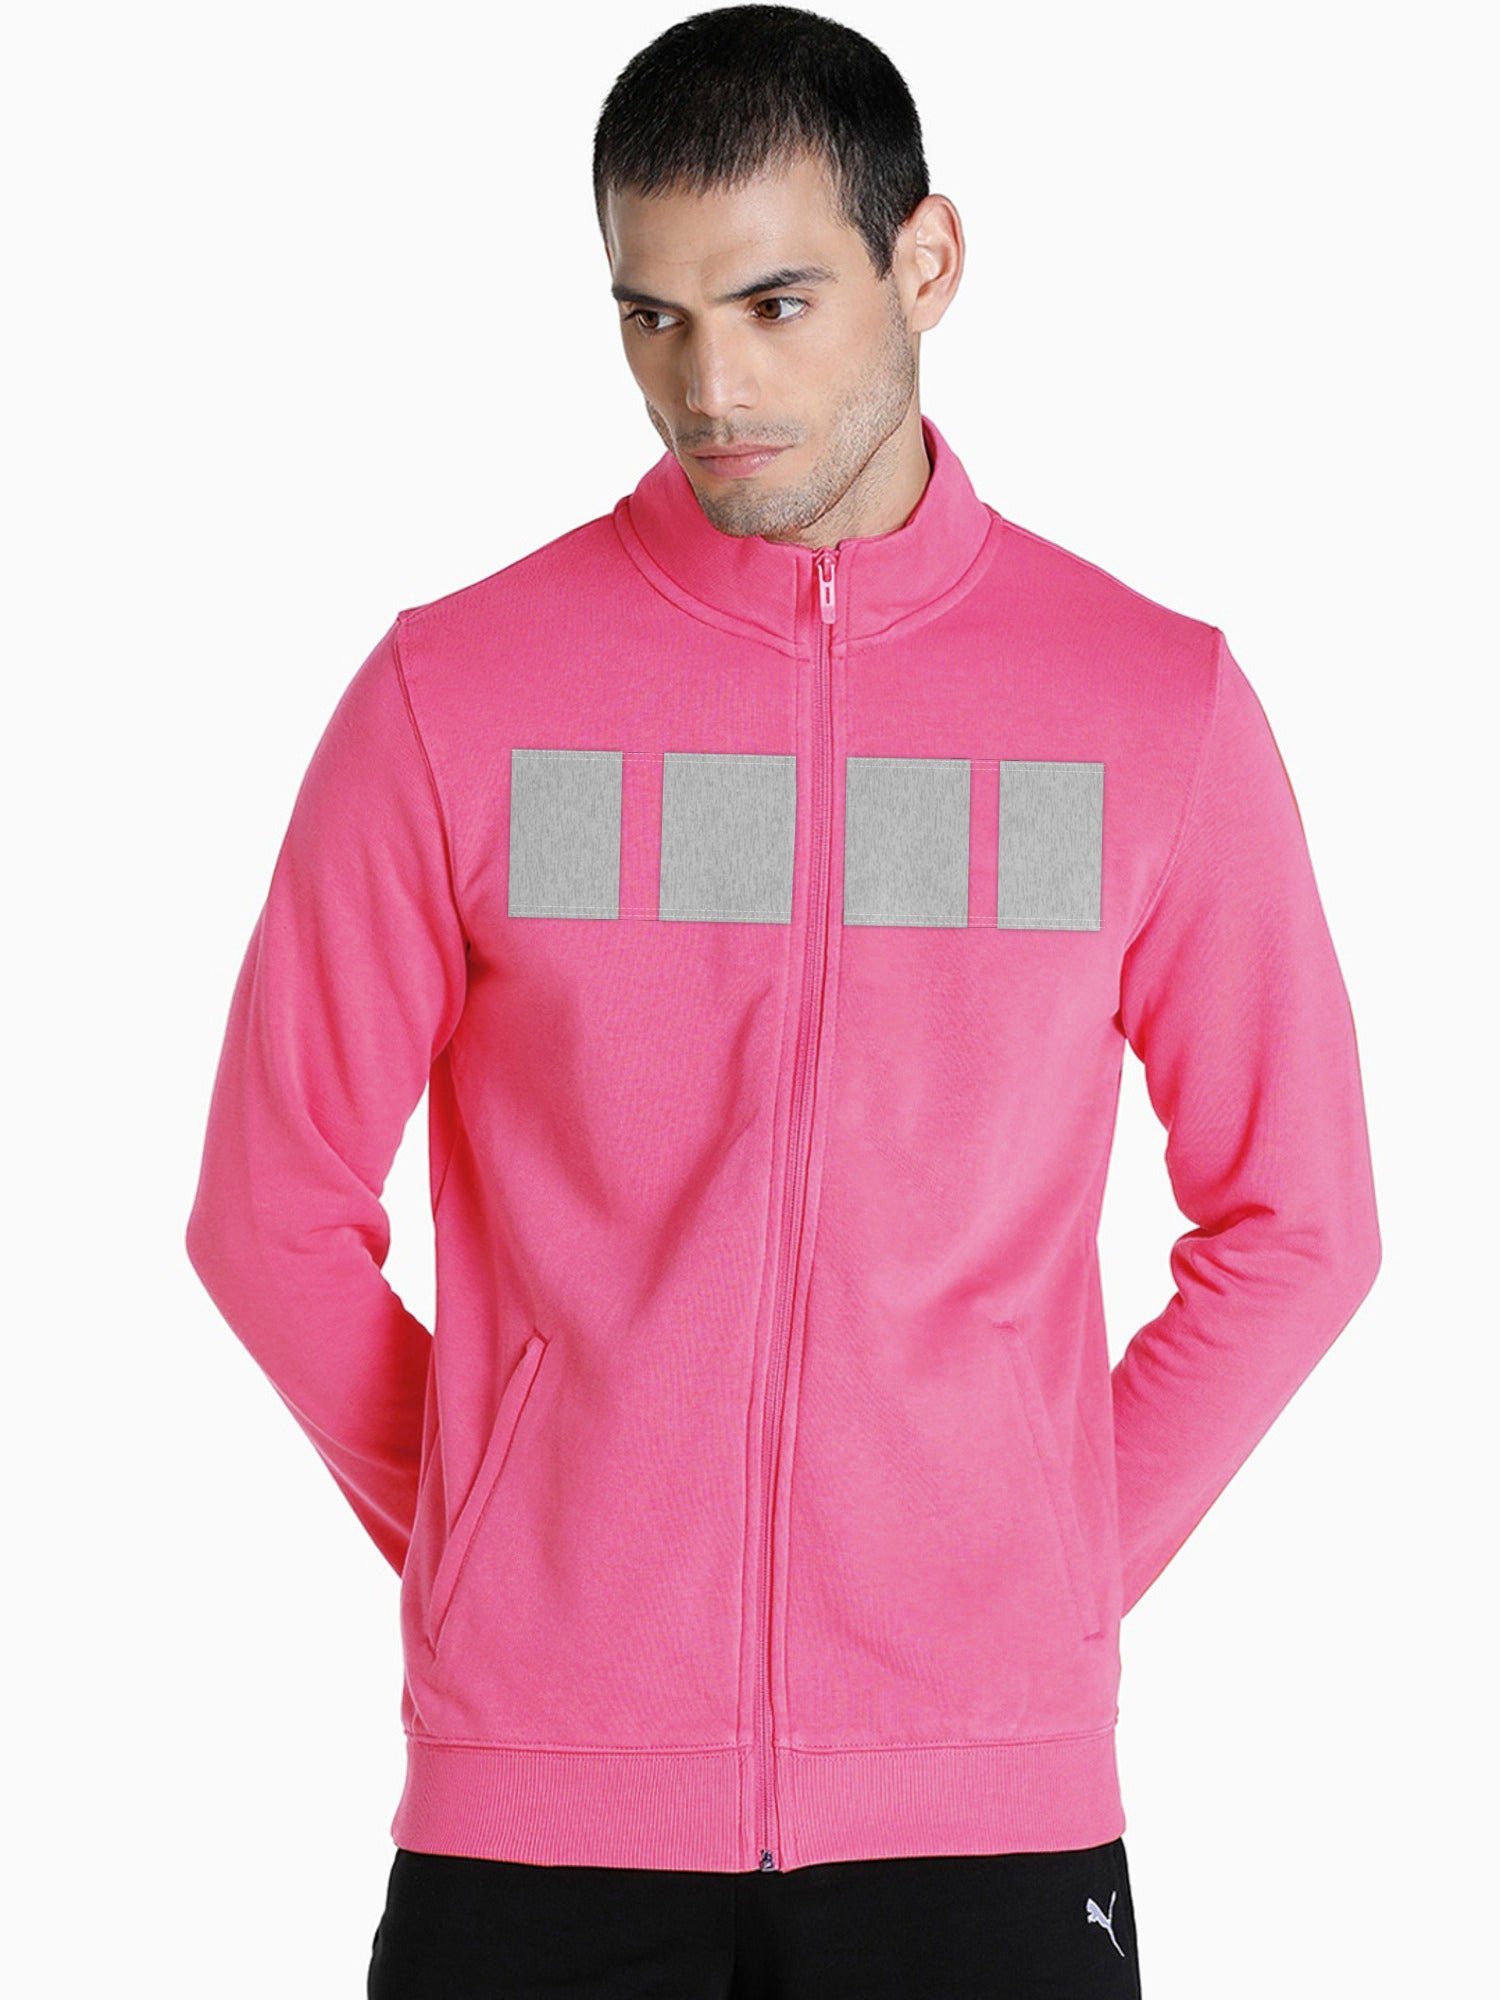 Nyc Polo Fleece Zipper Mock Neck Jacket For Men-Pink with Grey Panel-SP472